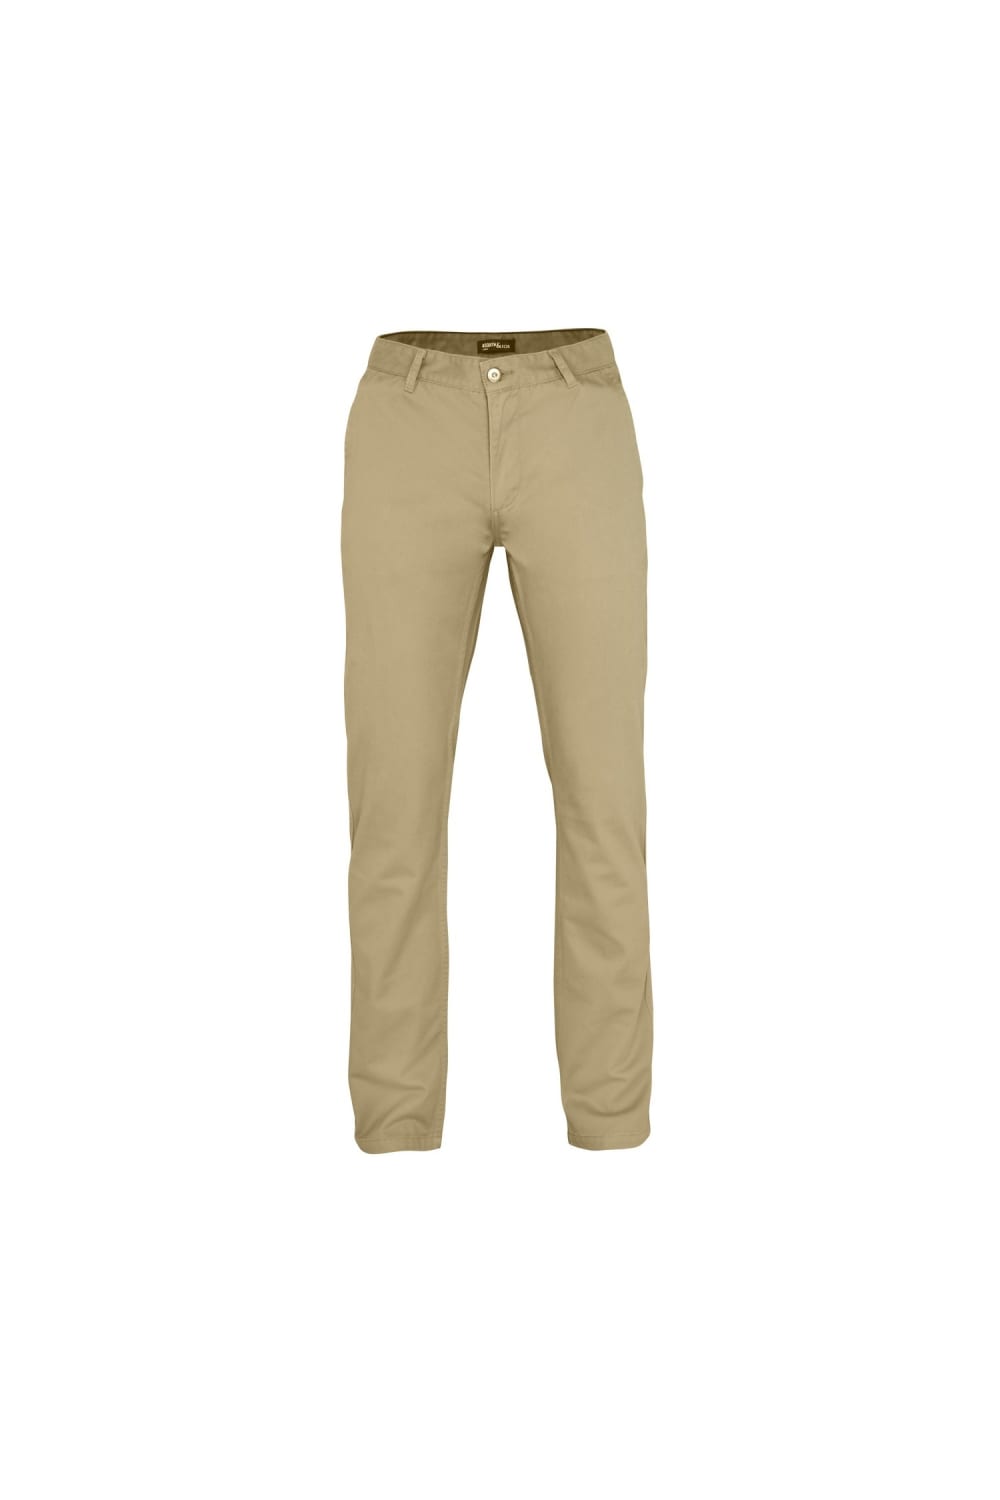 Asquith & Fox Mens Classic Casual Chino Pants/Trousers (Khaki)